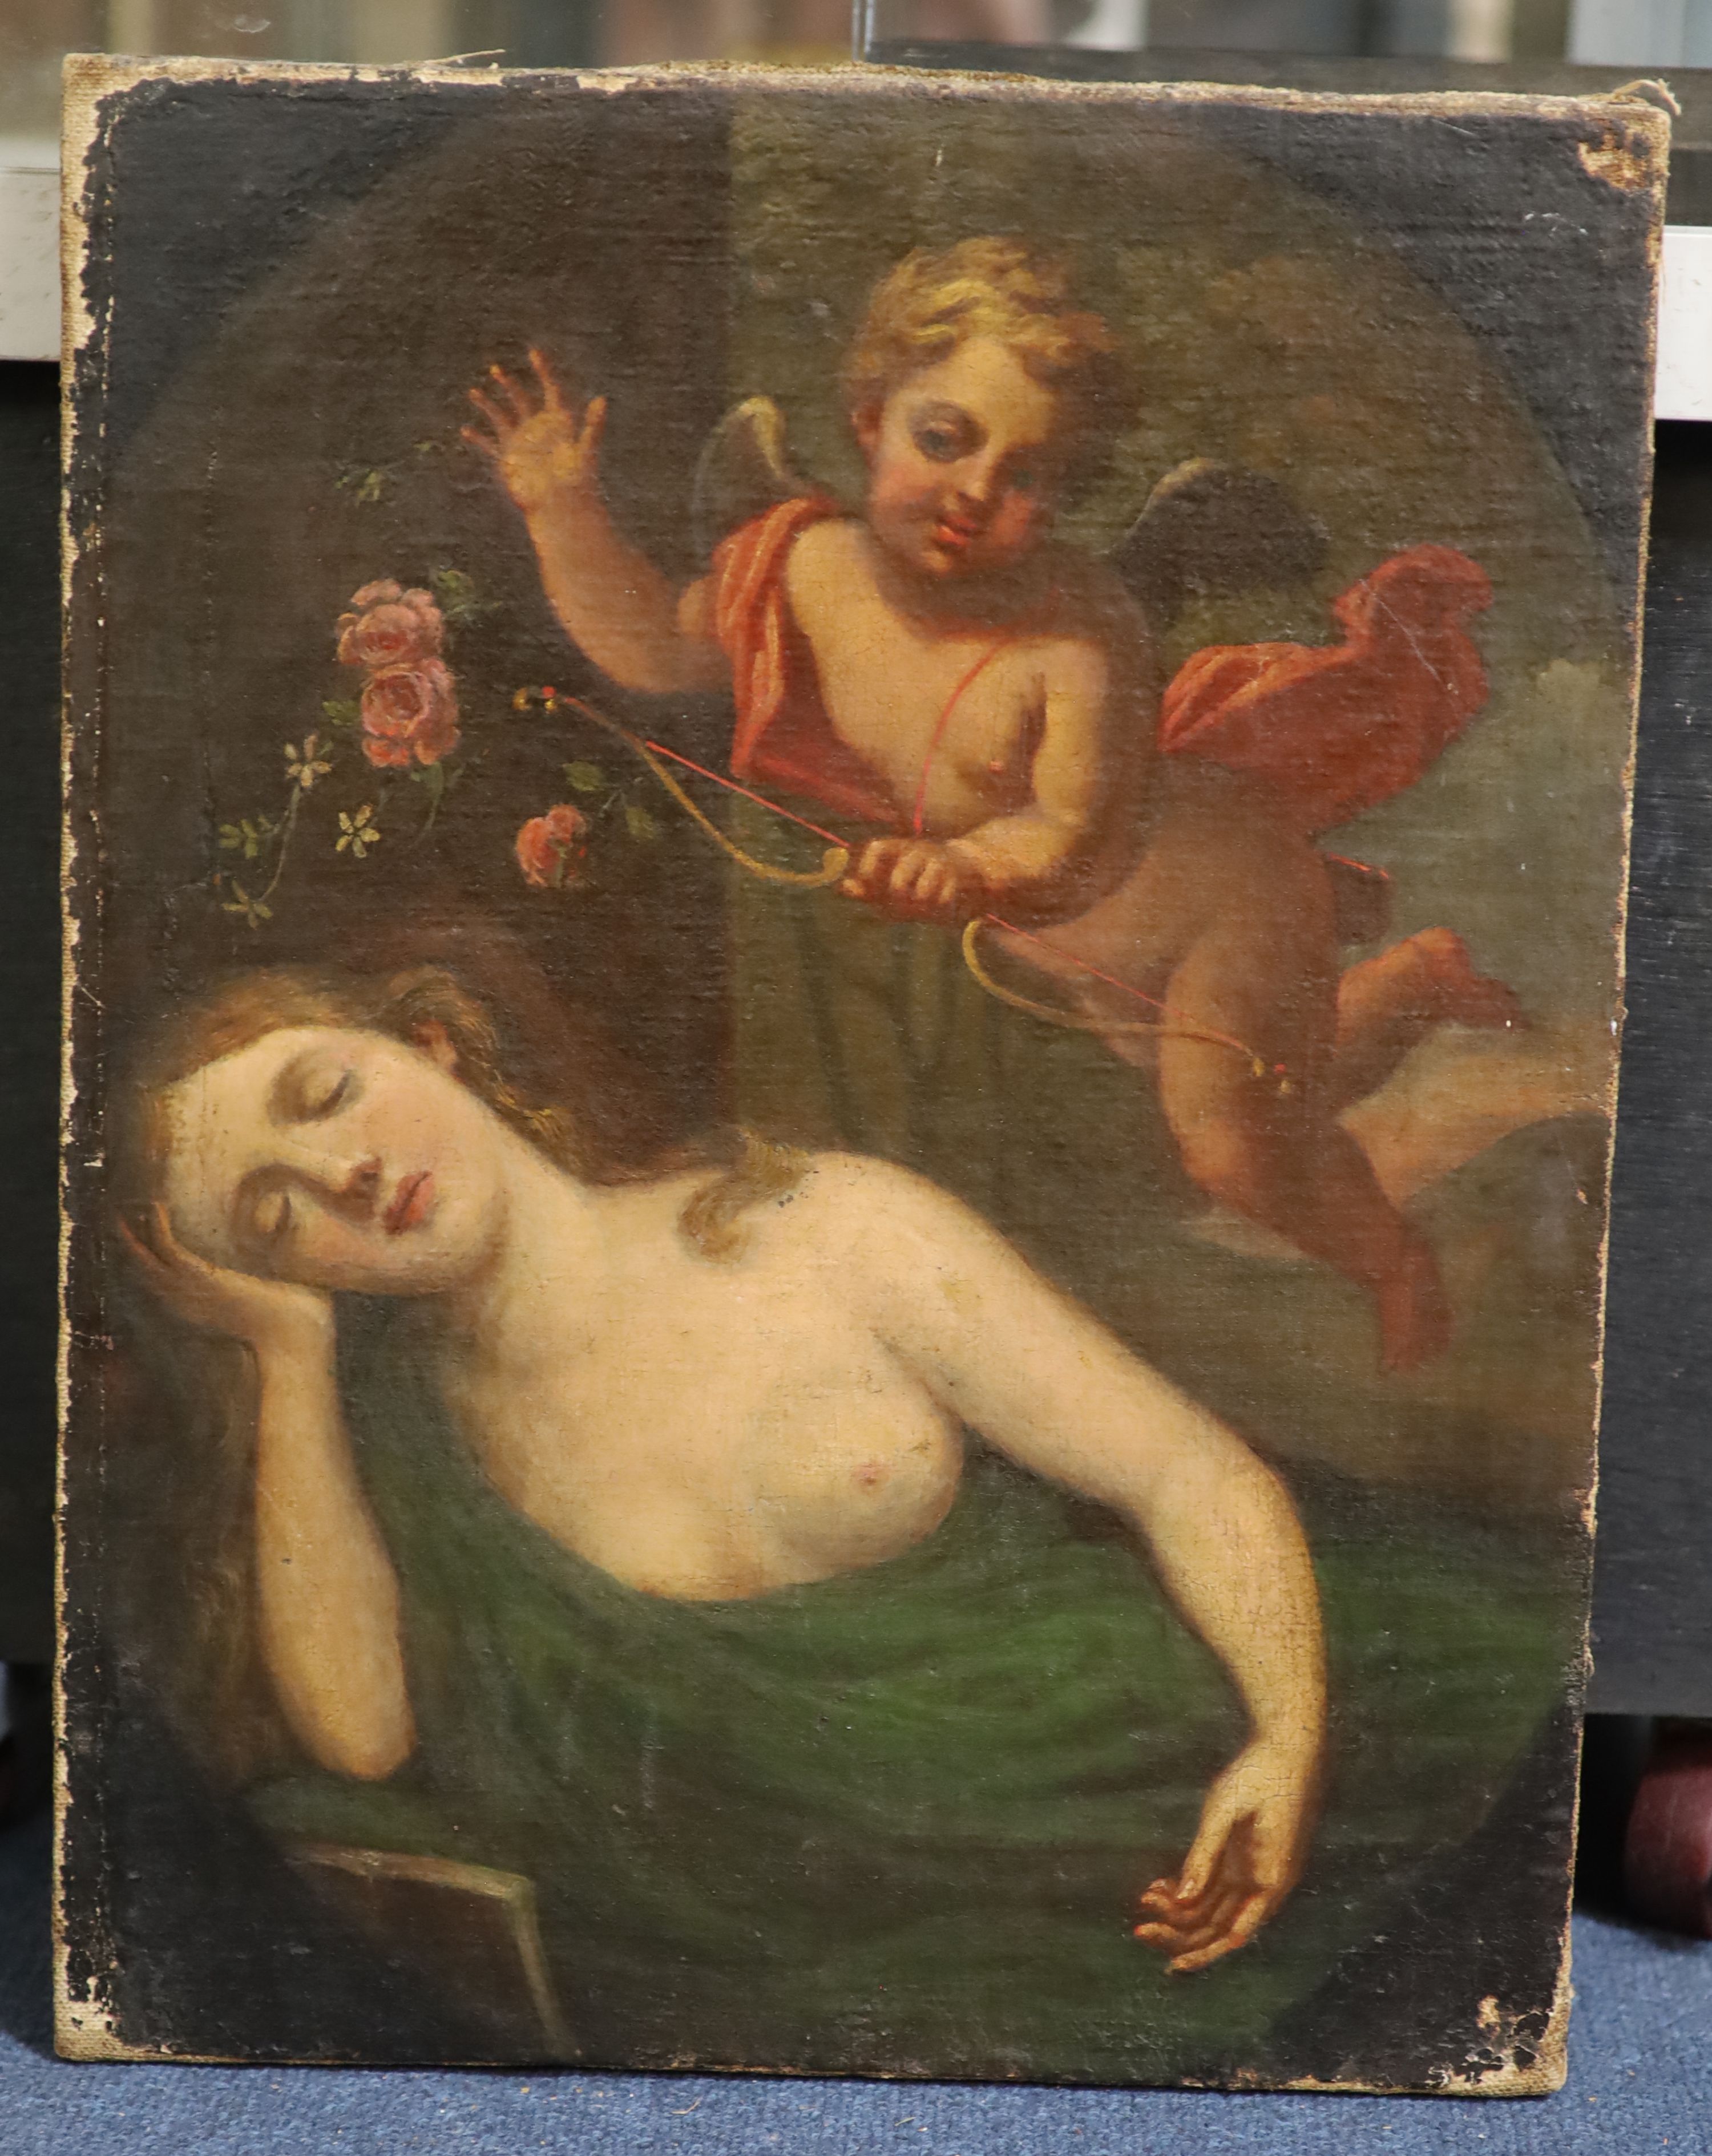 19th century English School, Cupid and a sleeping Venus, Oil on canvas, 43 x 34 cm. unframed